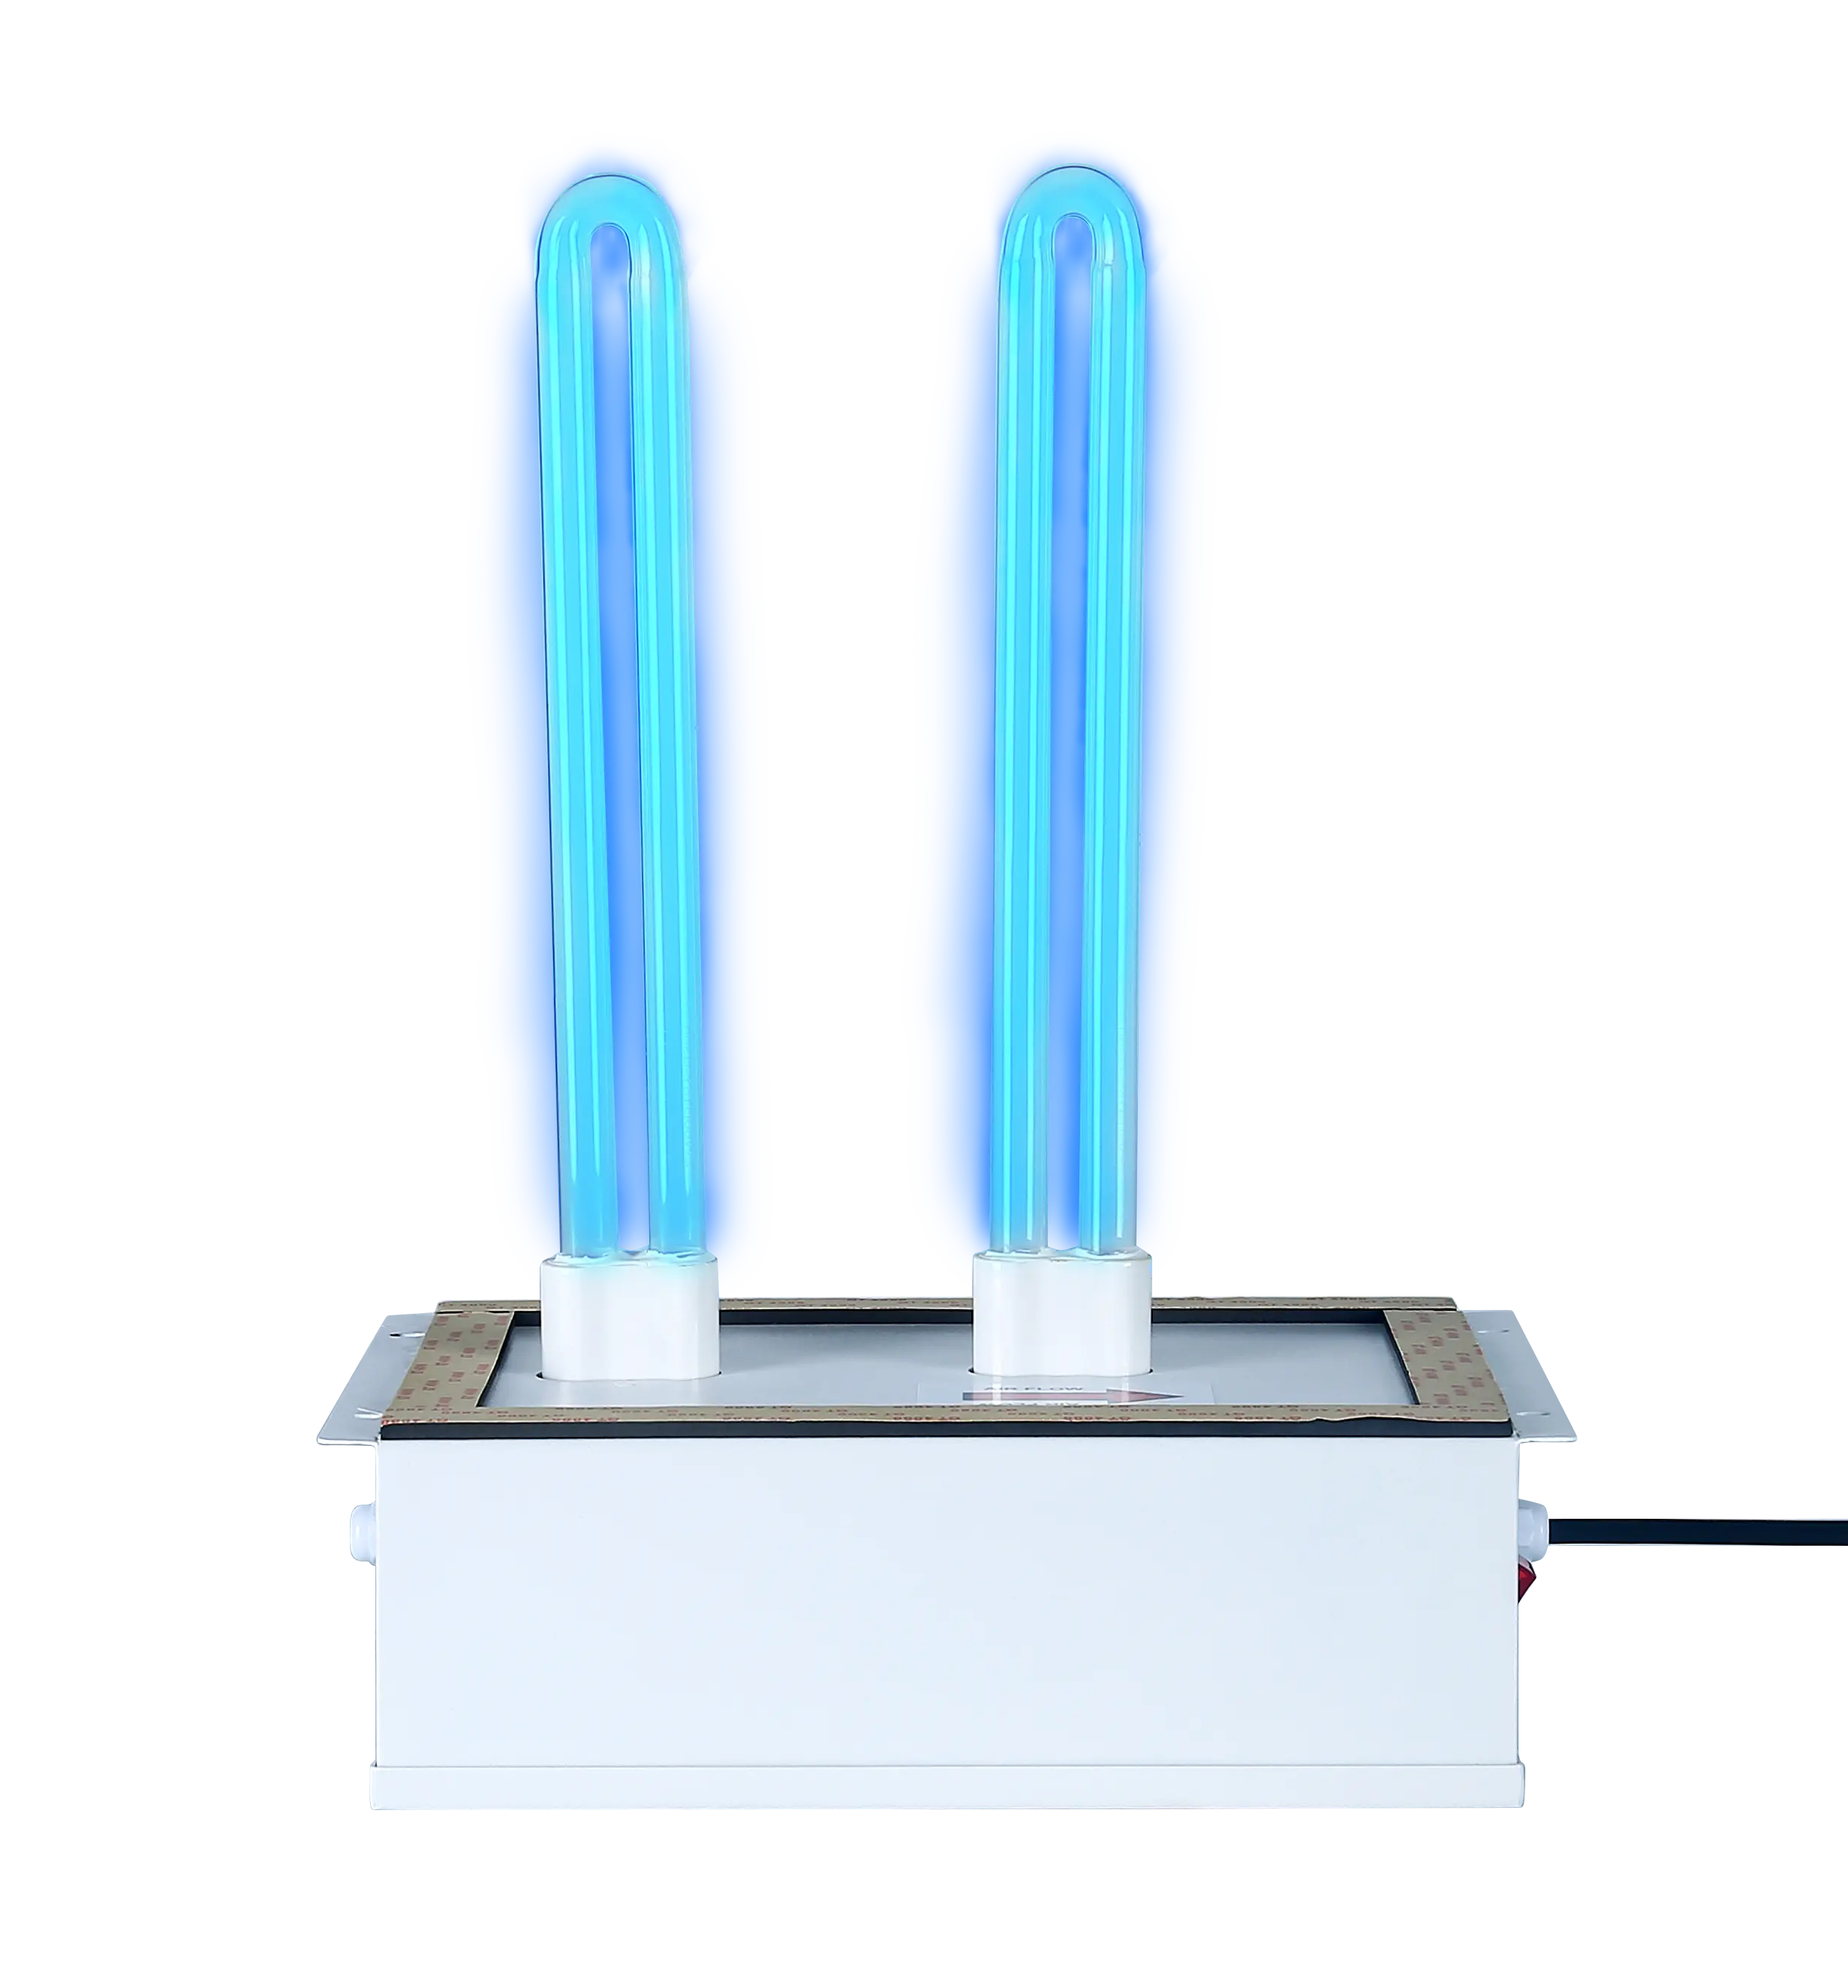 G200 Dual UV Light Germicidal Air Cleanser for HVAC/AC Ductwork